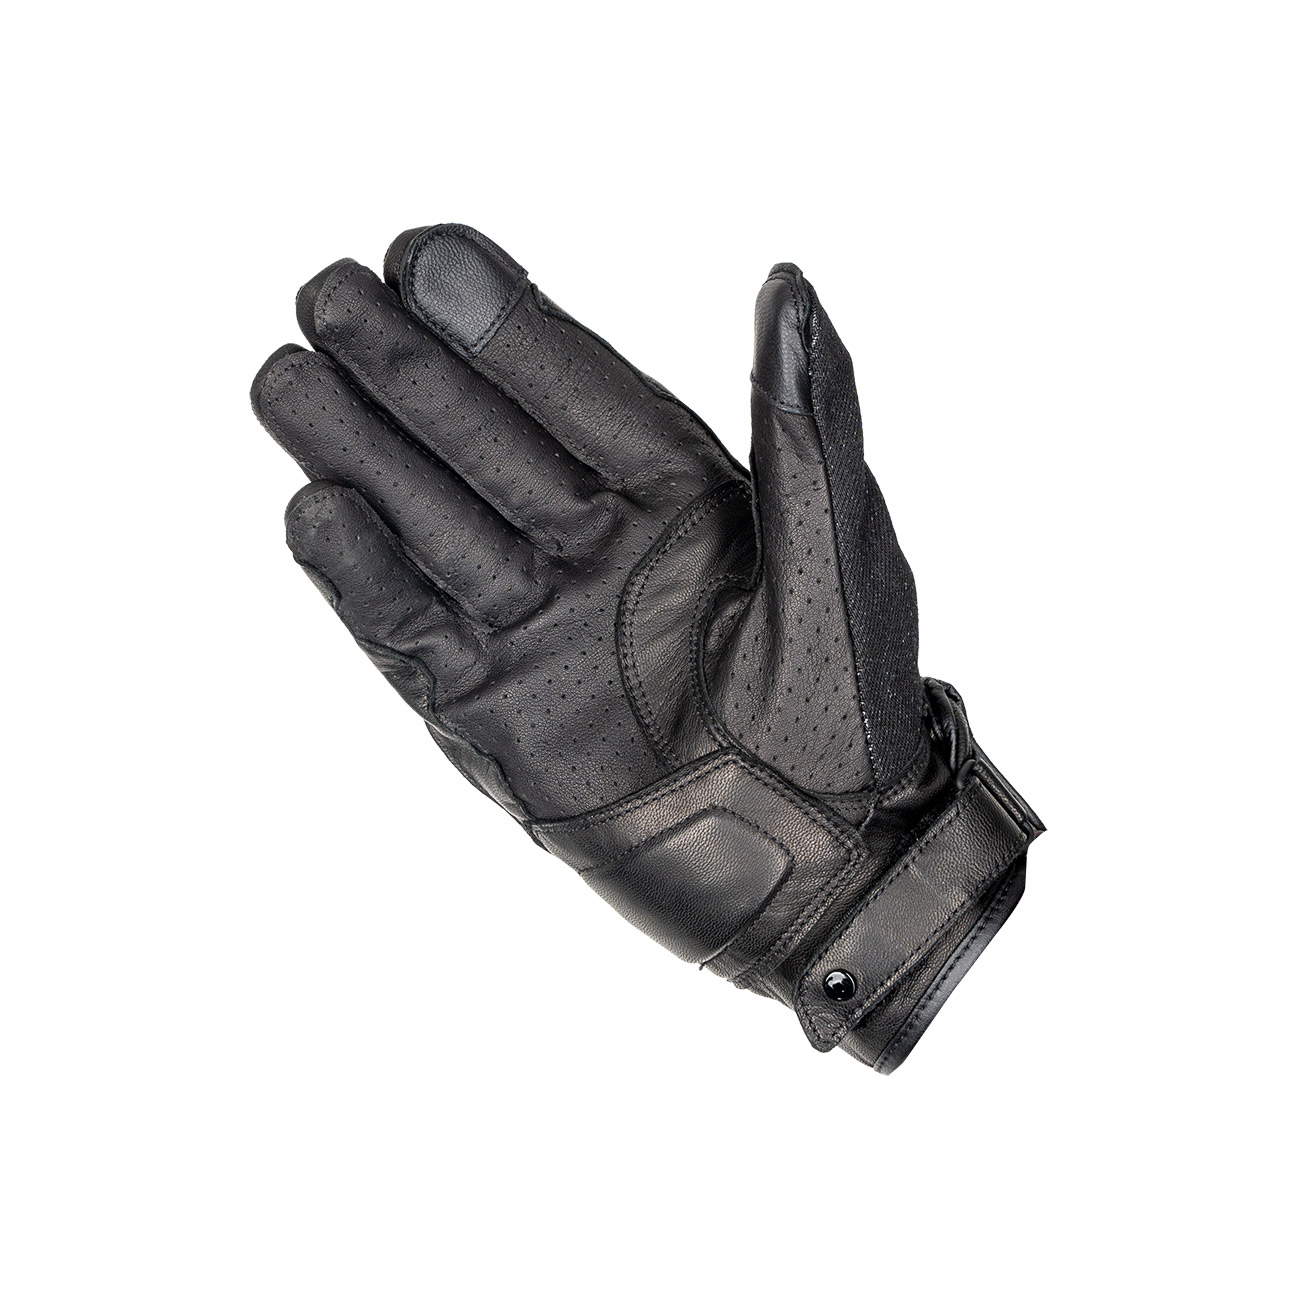 Southfield Adventure glove